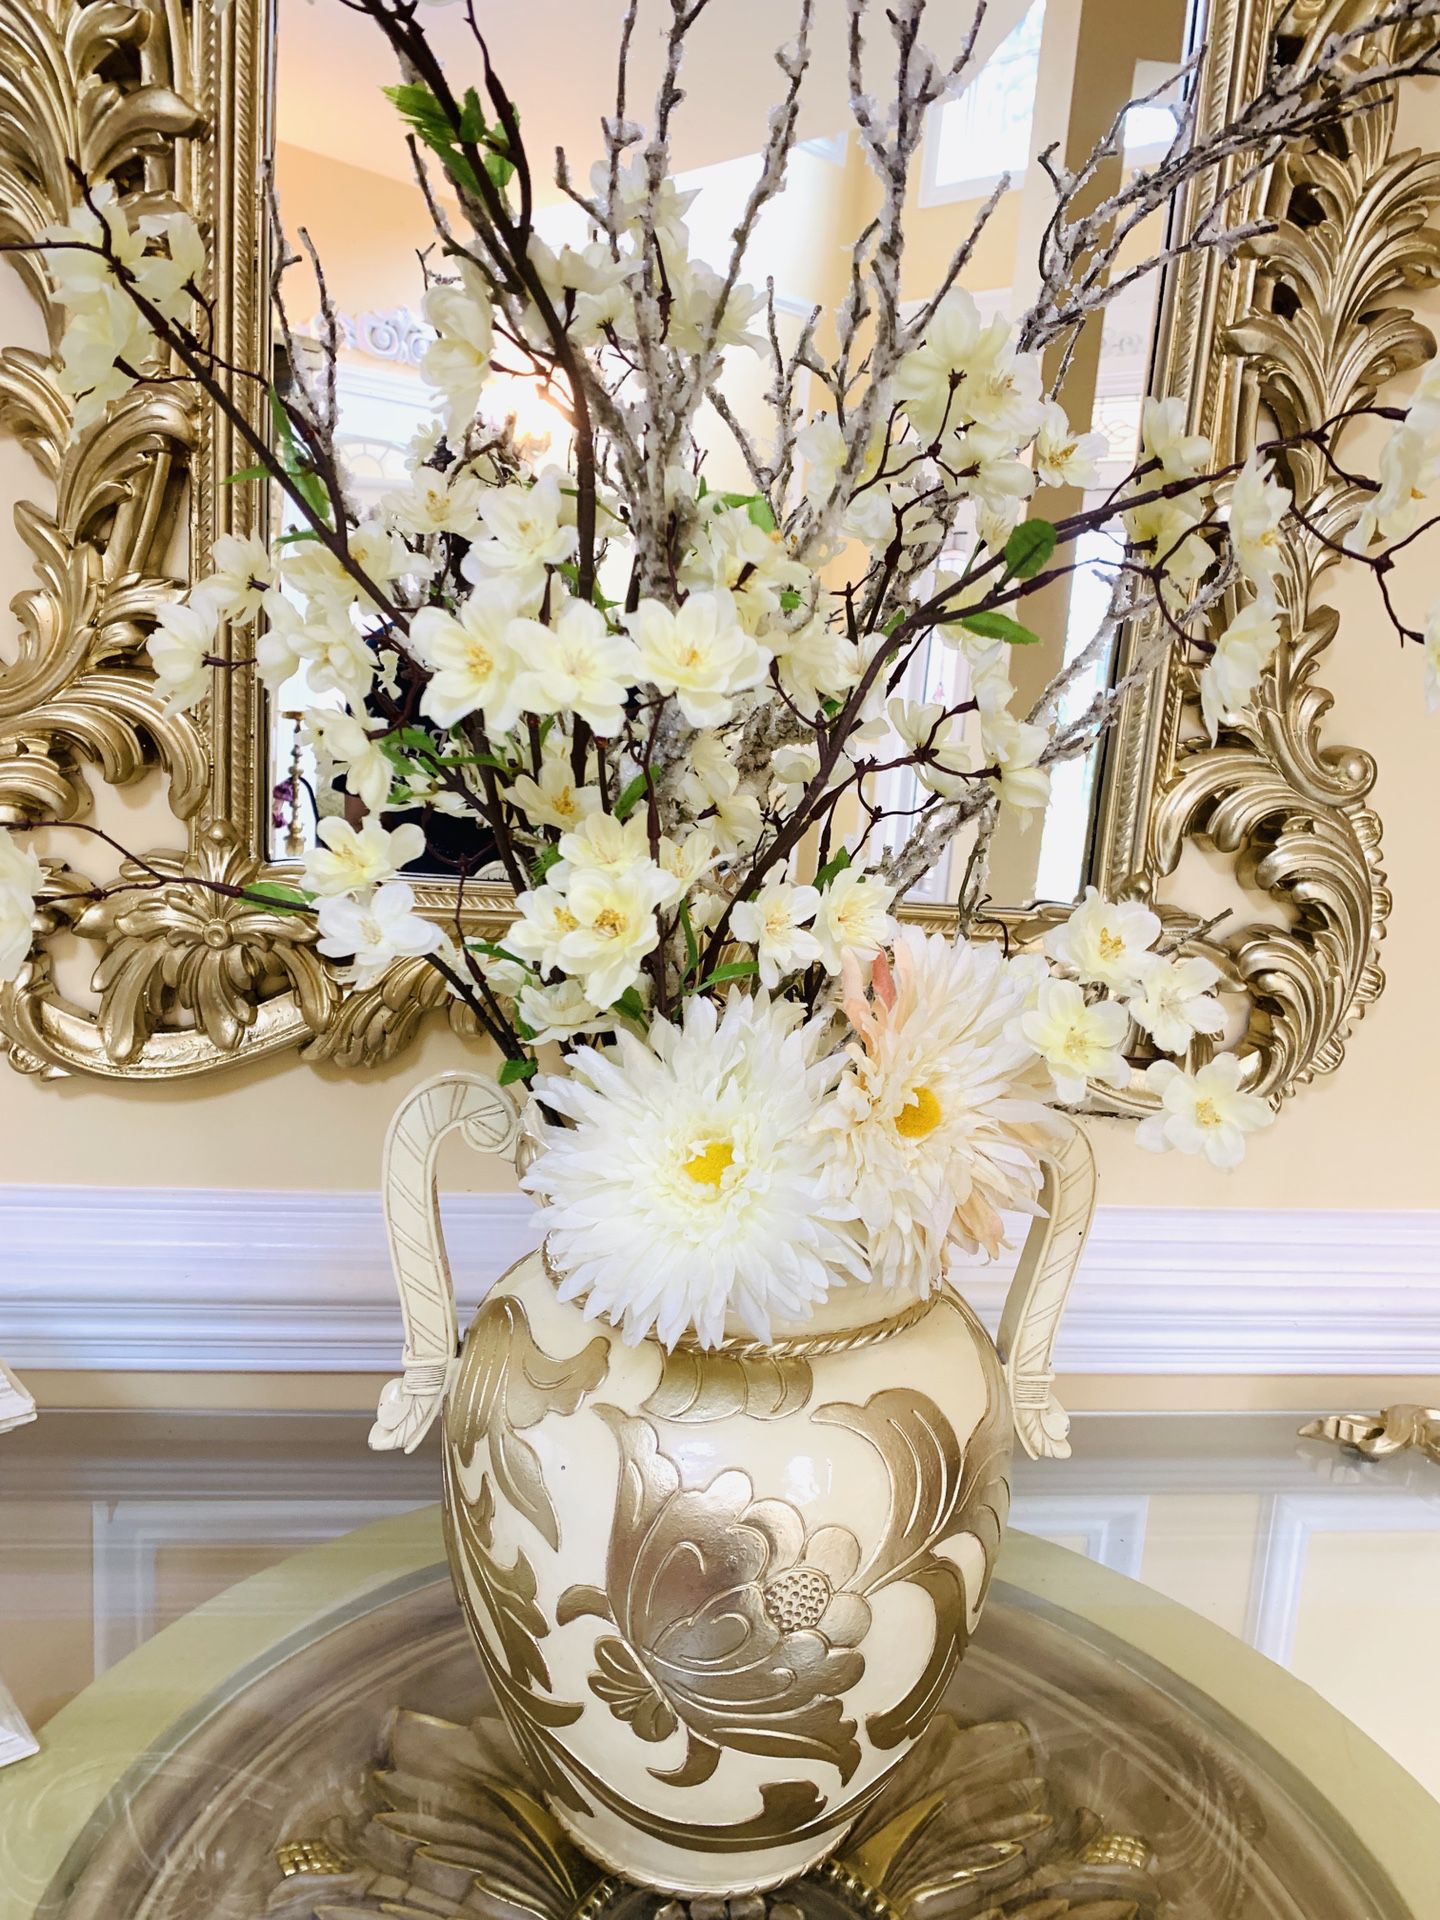 Beautiful ceramic vase with flowers